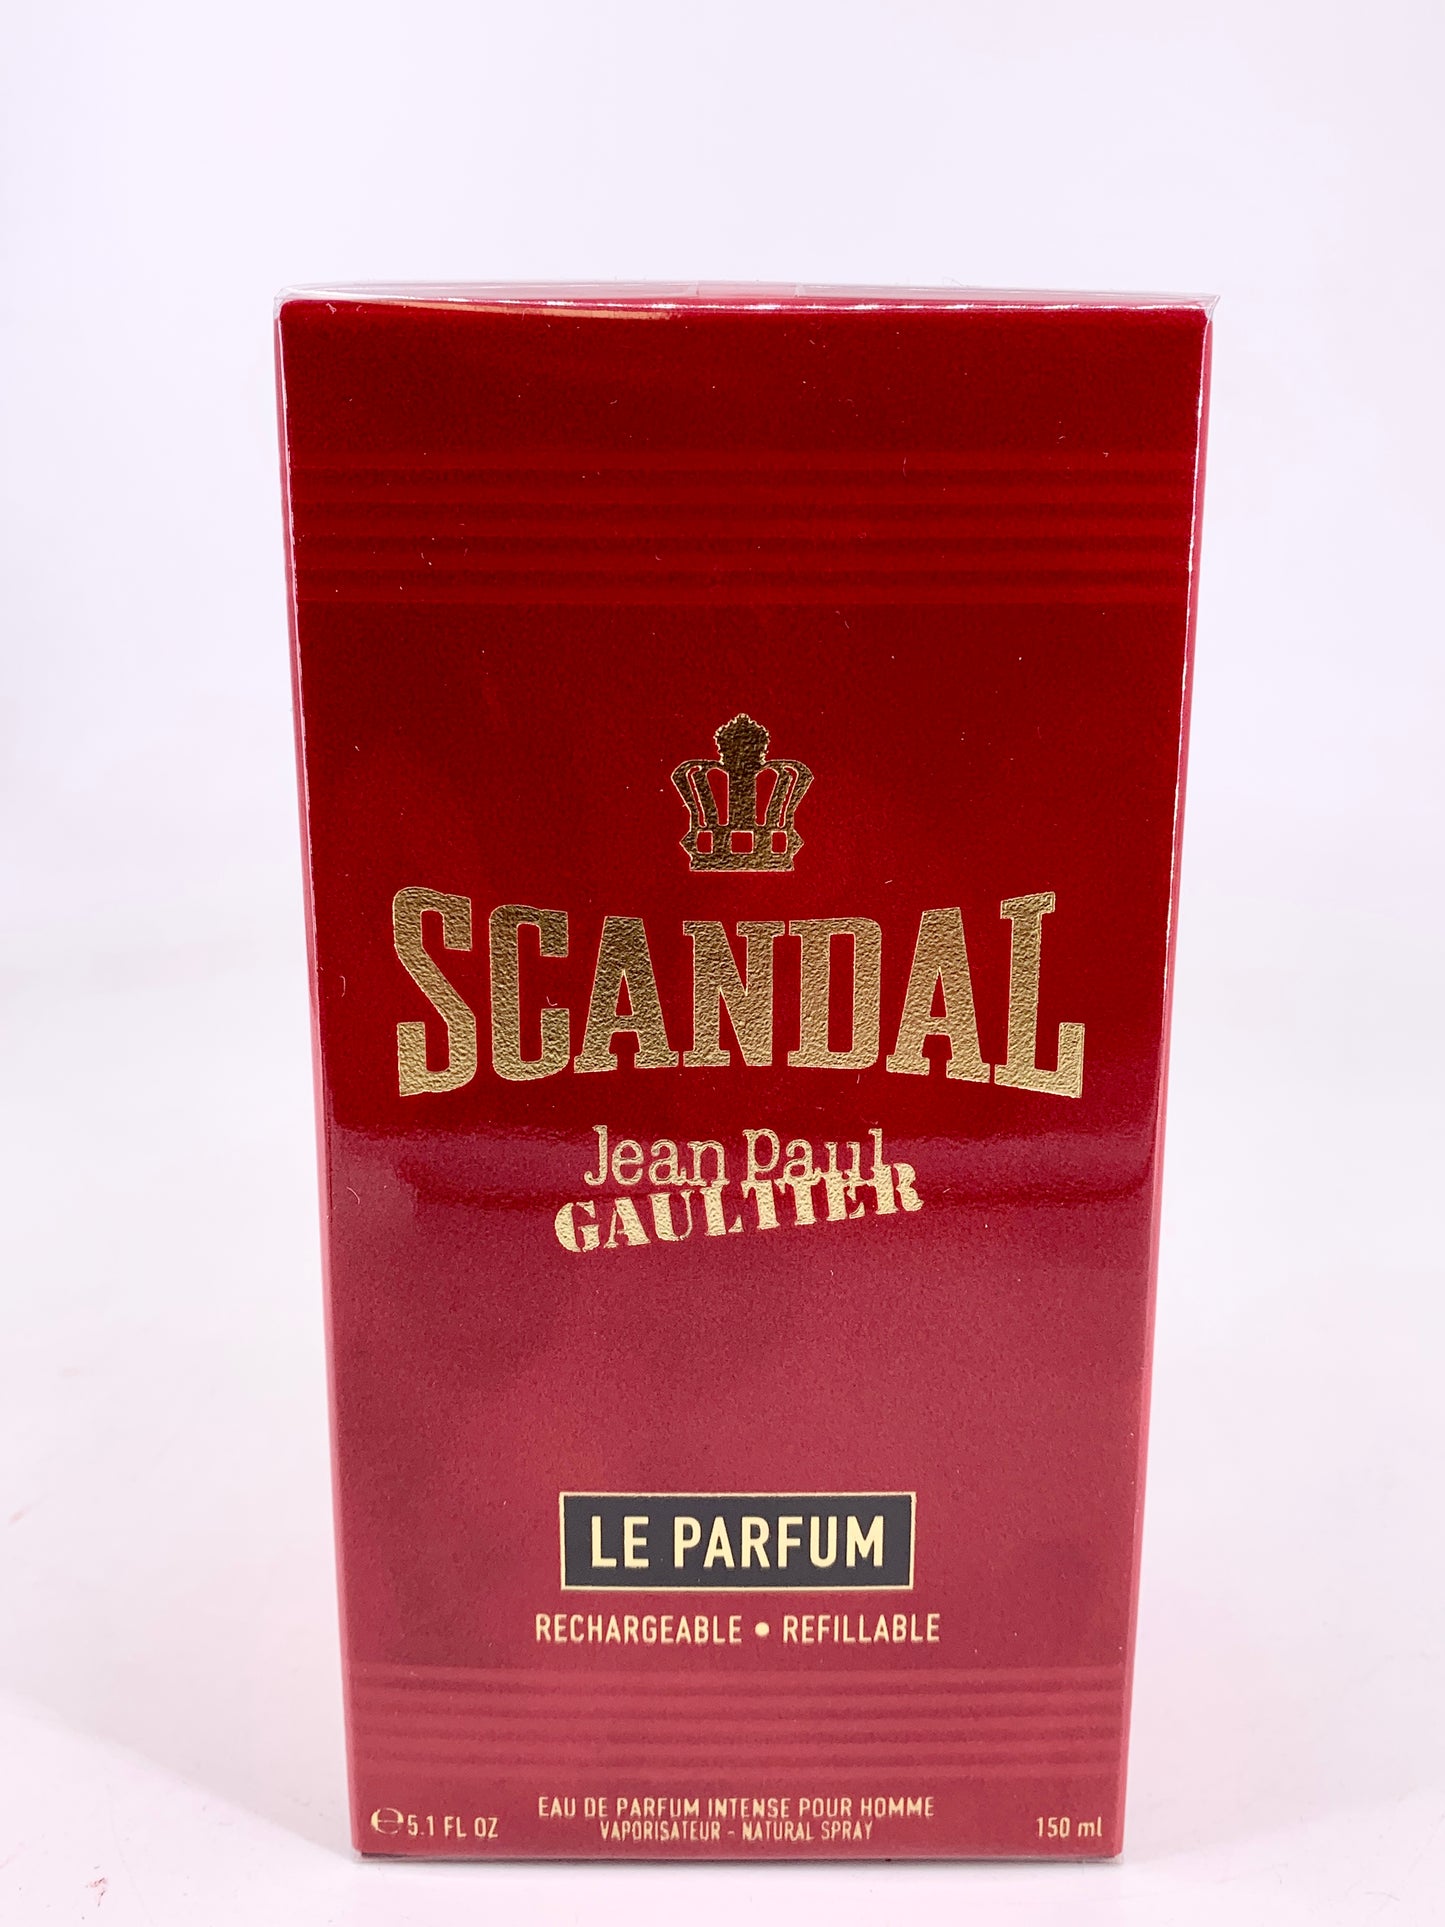 Jean Paul Gaultier Scandal PH Le Parfum 150ml EDP